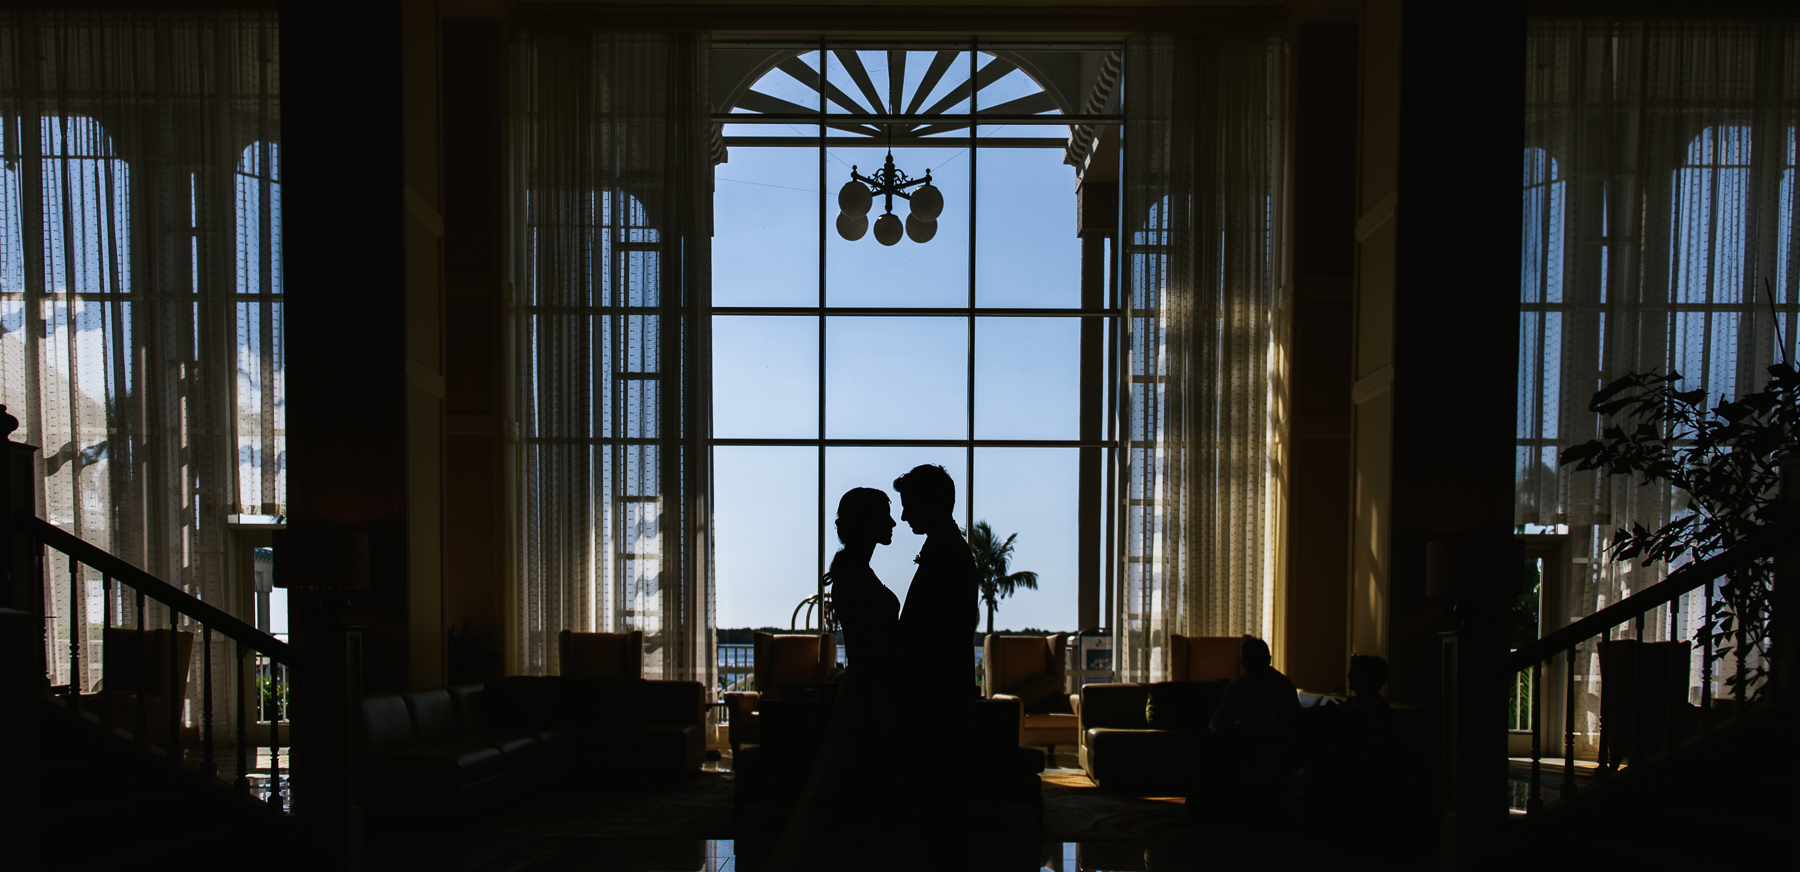 sanibel marriott hotel lobby wedding portrait